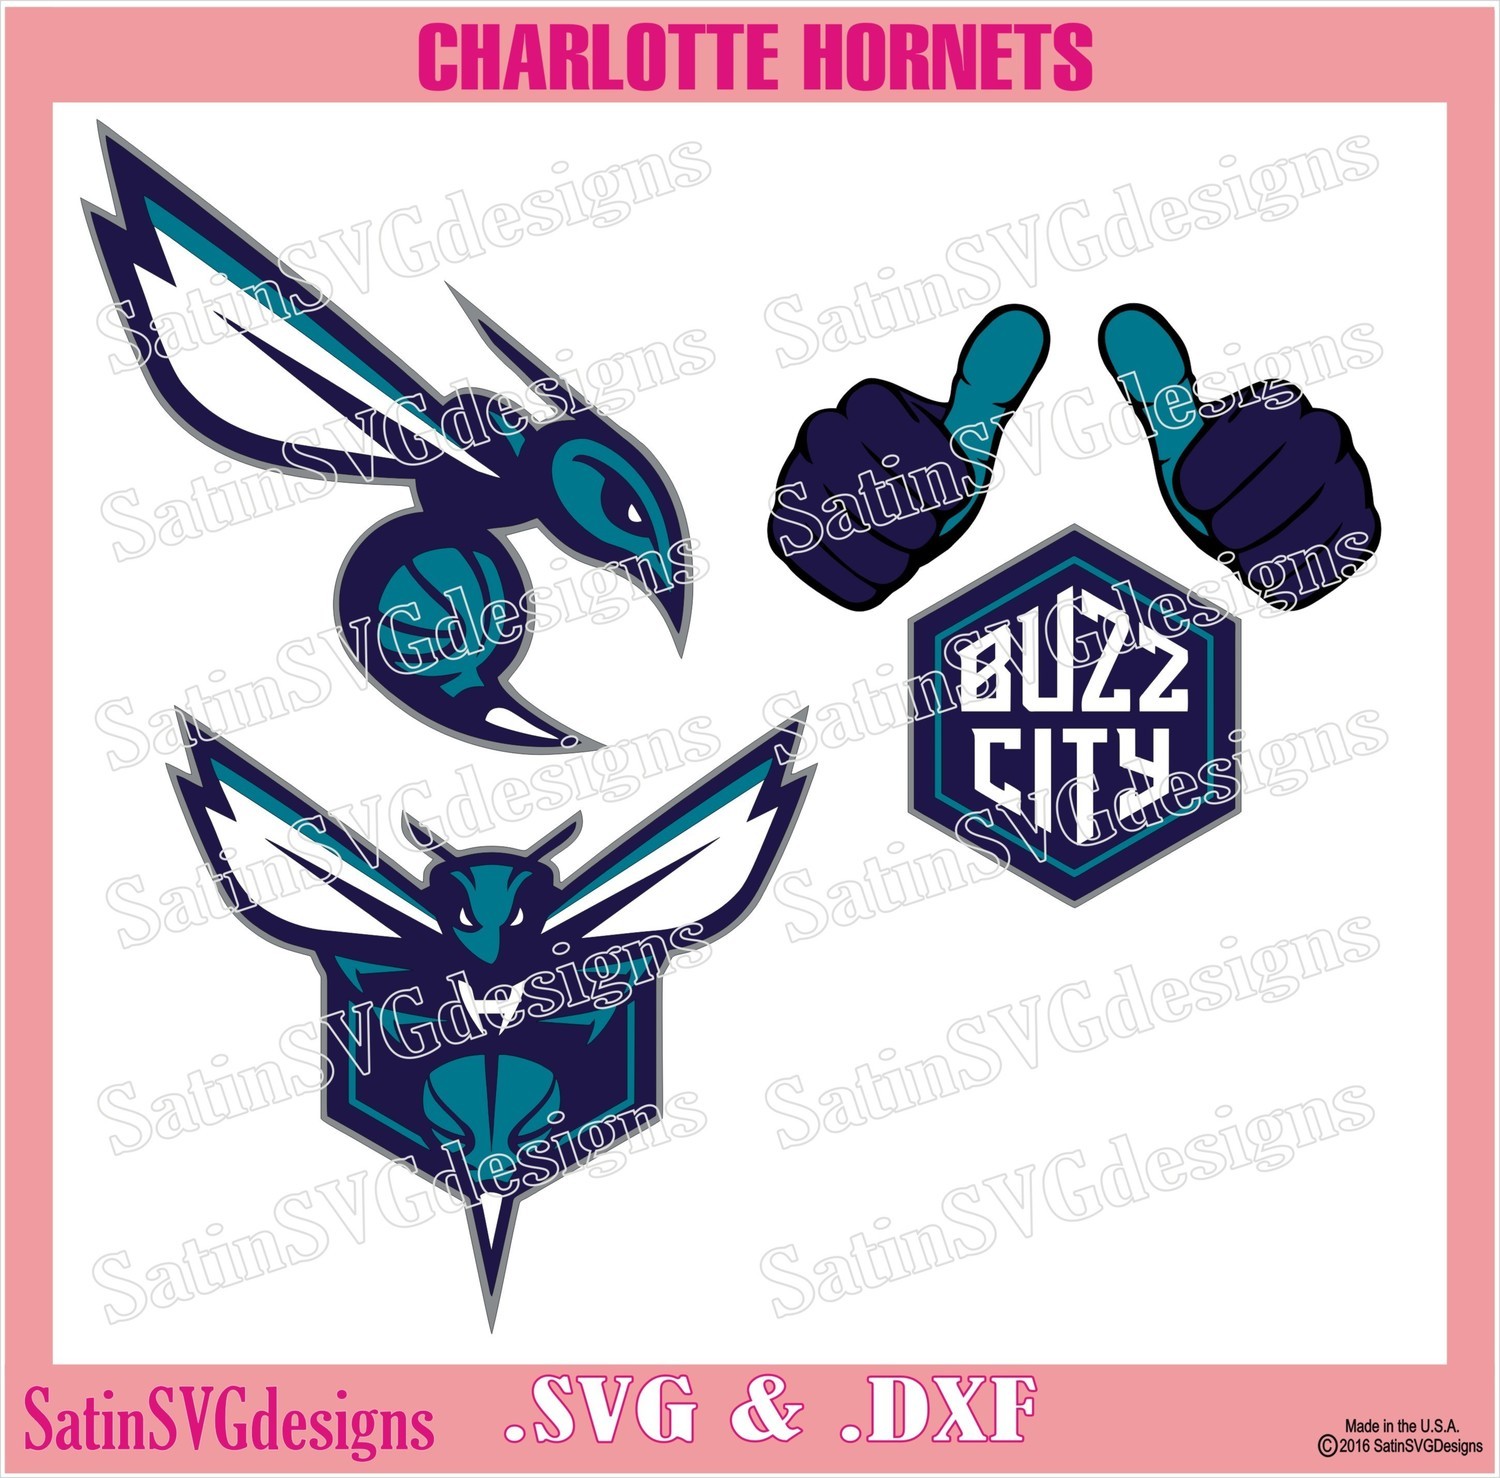 Charlotte Hornetts Buzz Design SVG Files, Cricut, Silhouette Studio, Digital Cut Files